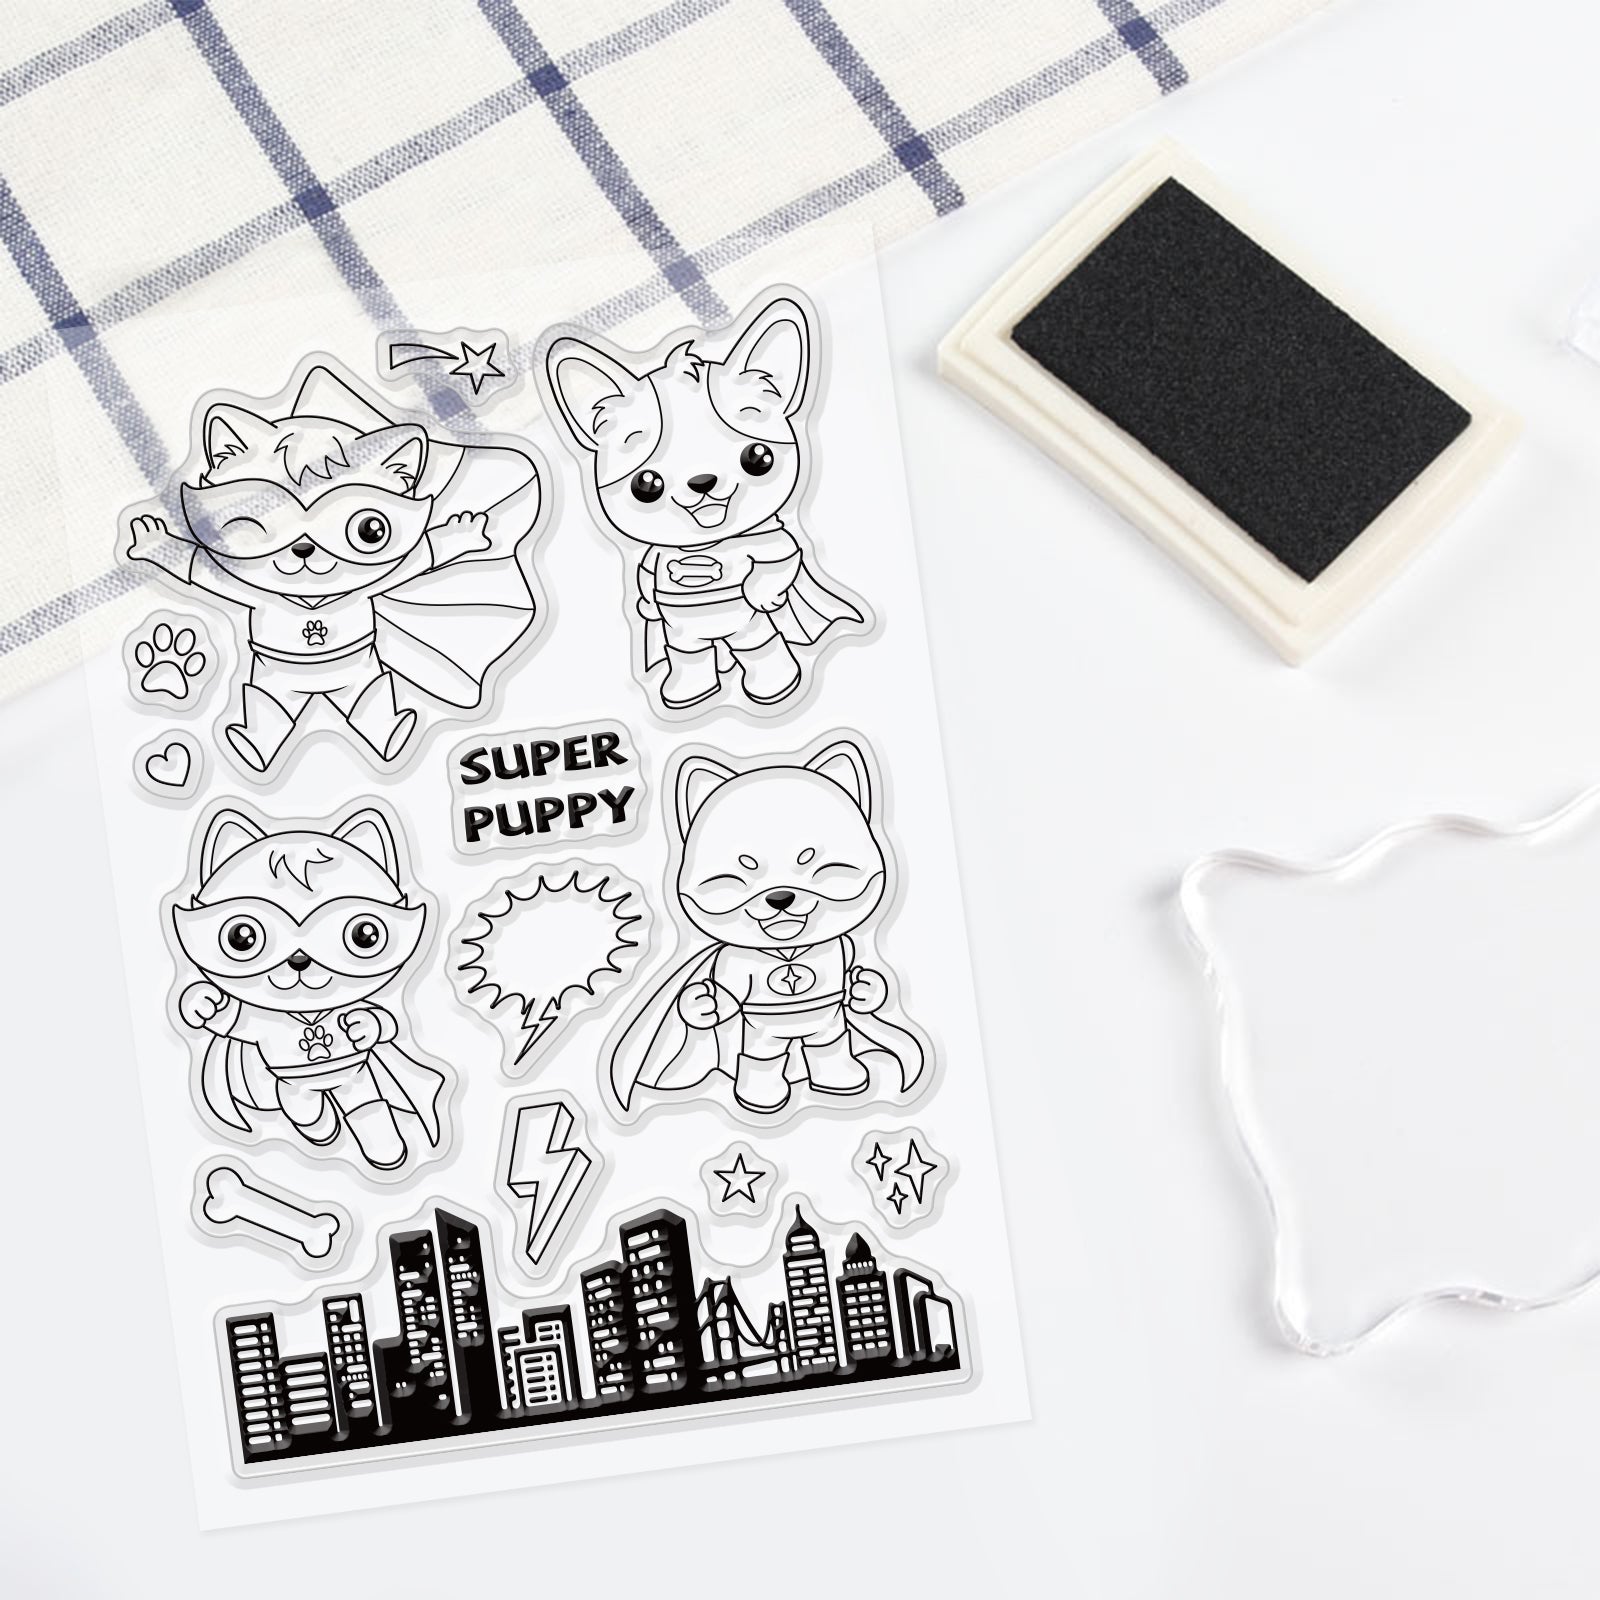 Globleland Animal, Dog, Superhero, Corgi, Shiba, City Clear Stamps Silicone Stamp Seal for Card Making Decoration and DIY Scrapbooking